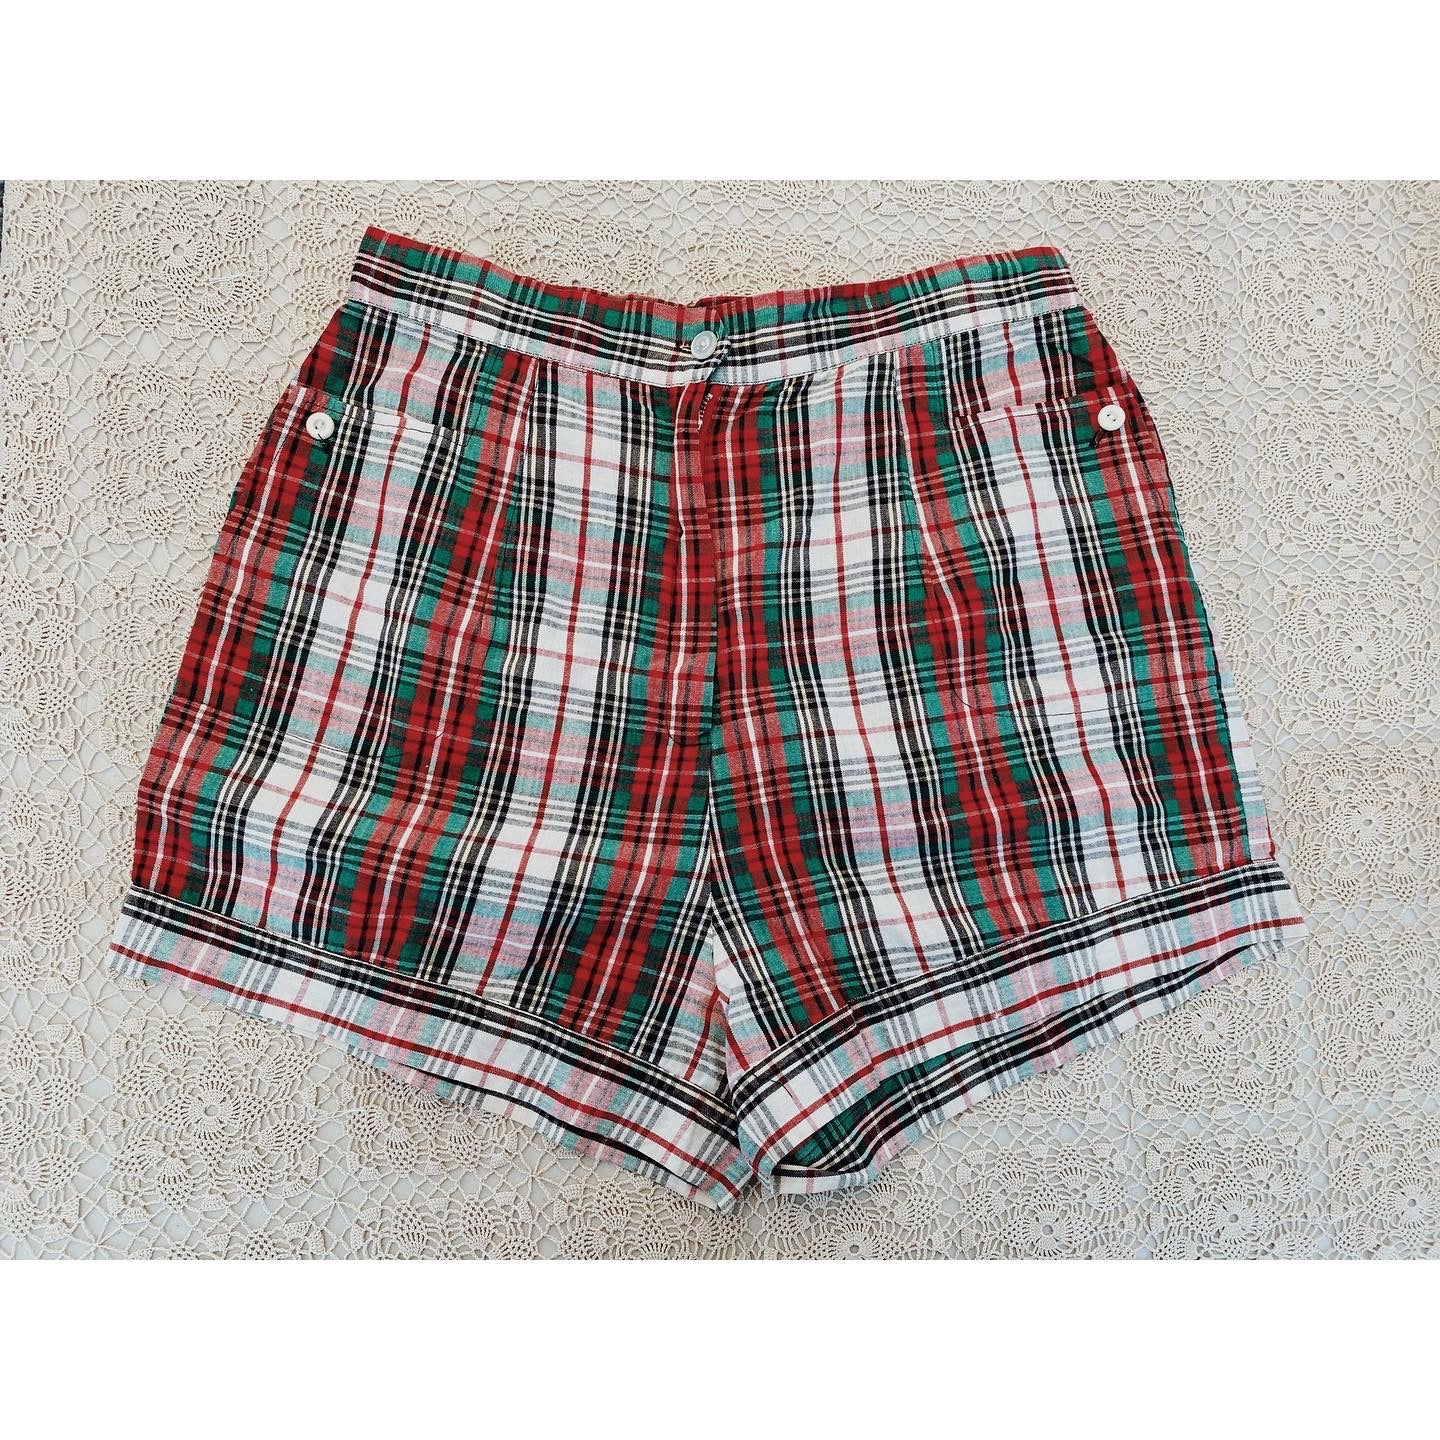 1950s Plaid Cotton Shorts w/ Cinches- 6/8